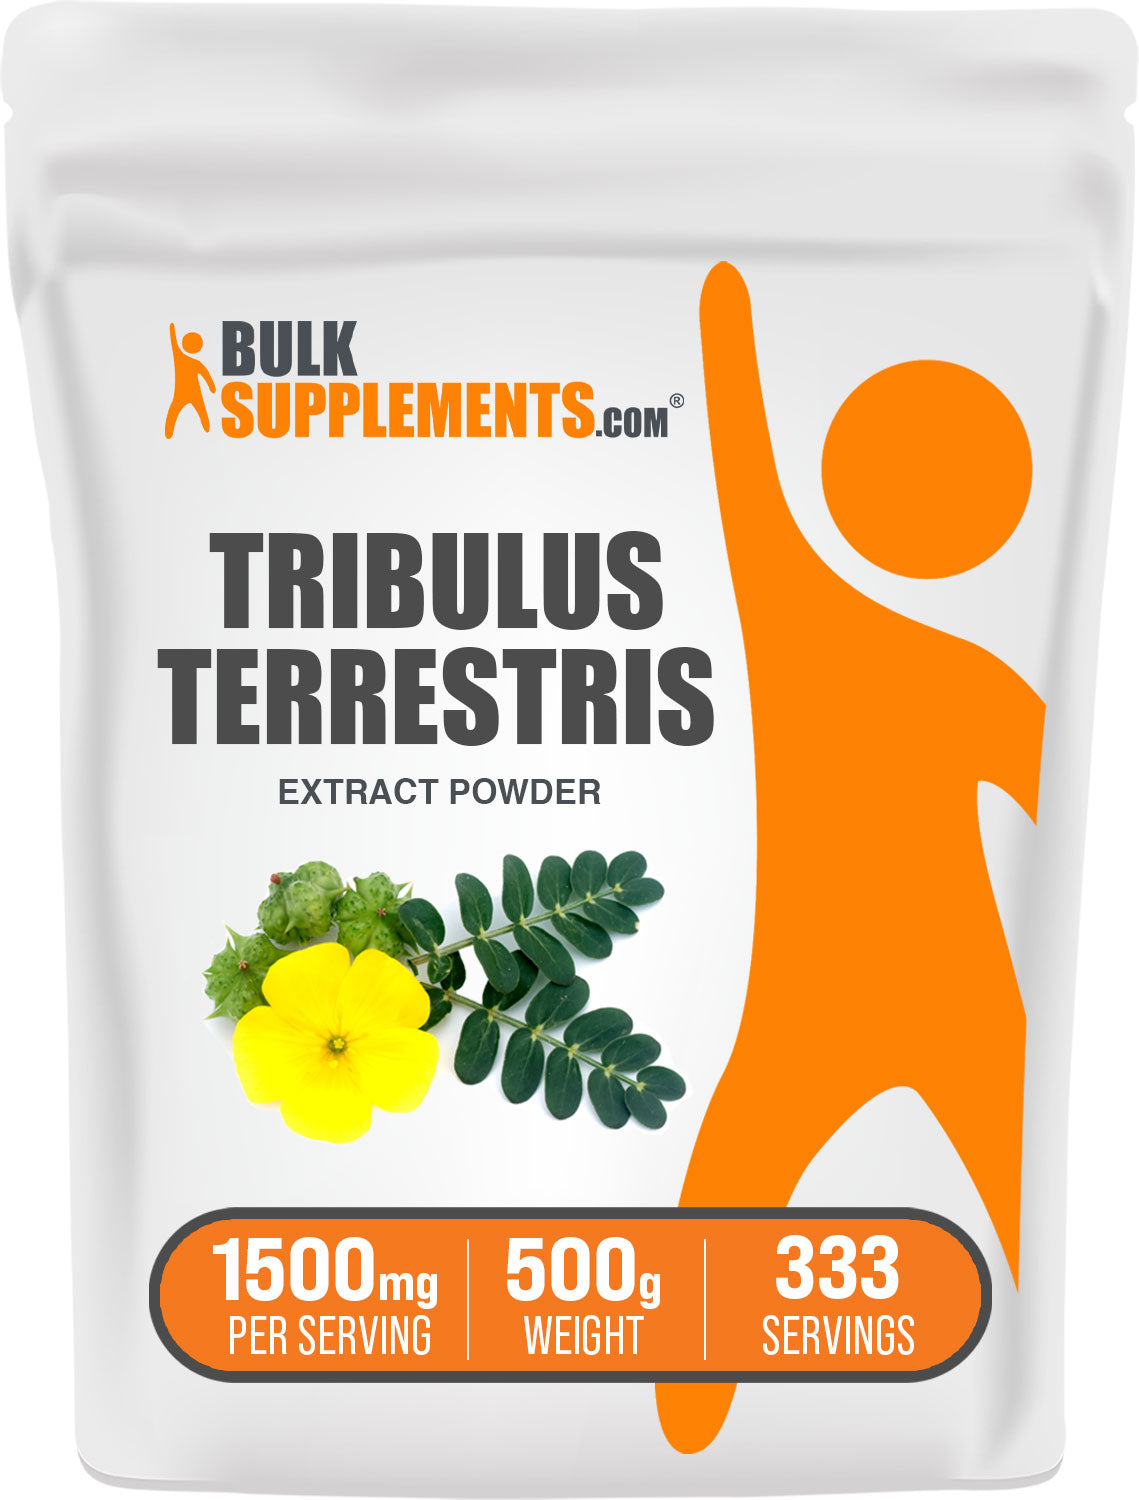 BulkSupplements Tribulus Terrestris Extract Powder 500g bag